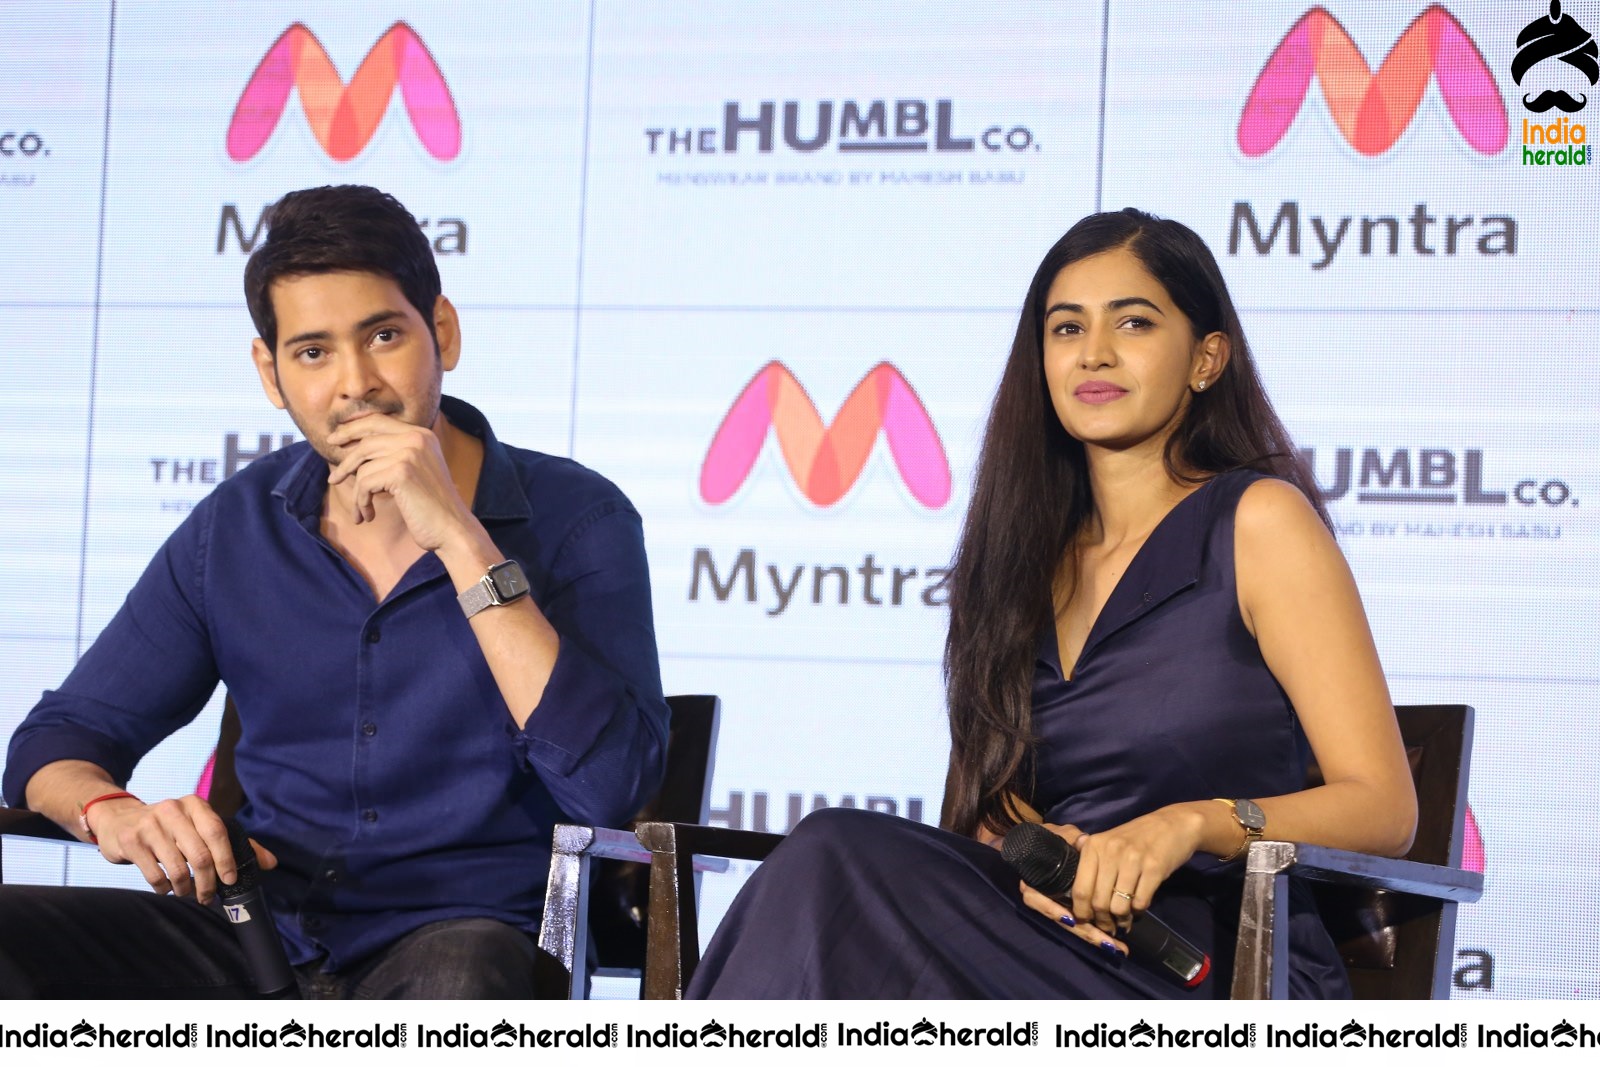 Mahesh Babu Launches His Apparel Brand The Humbl co On Myntra Set 3